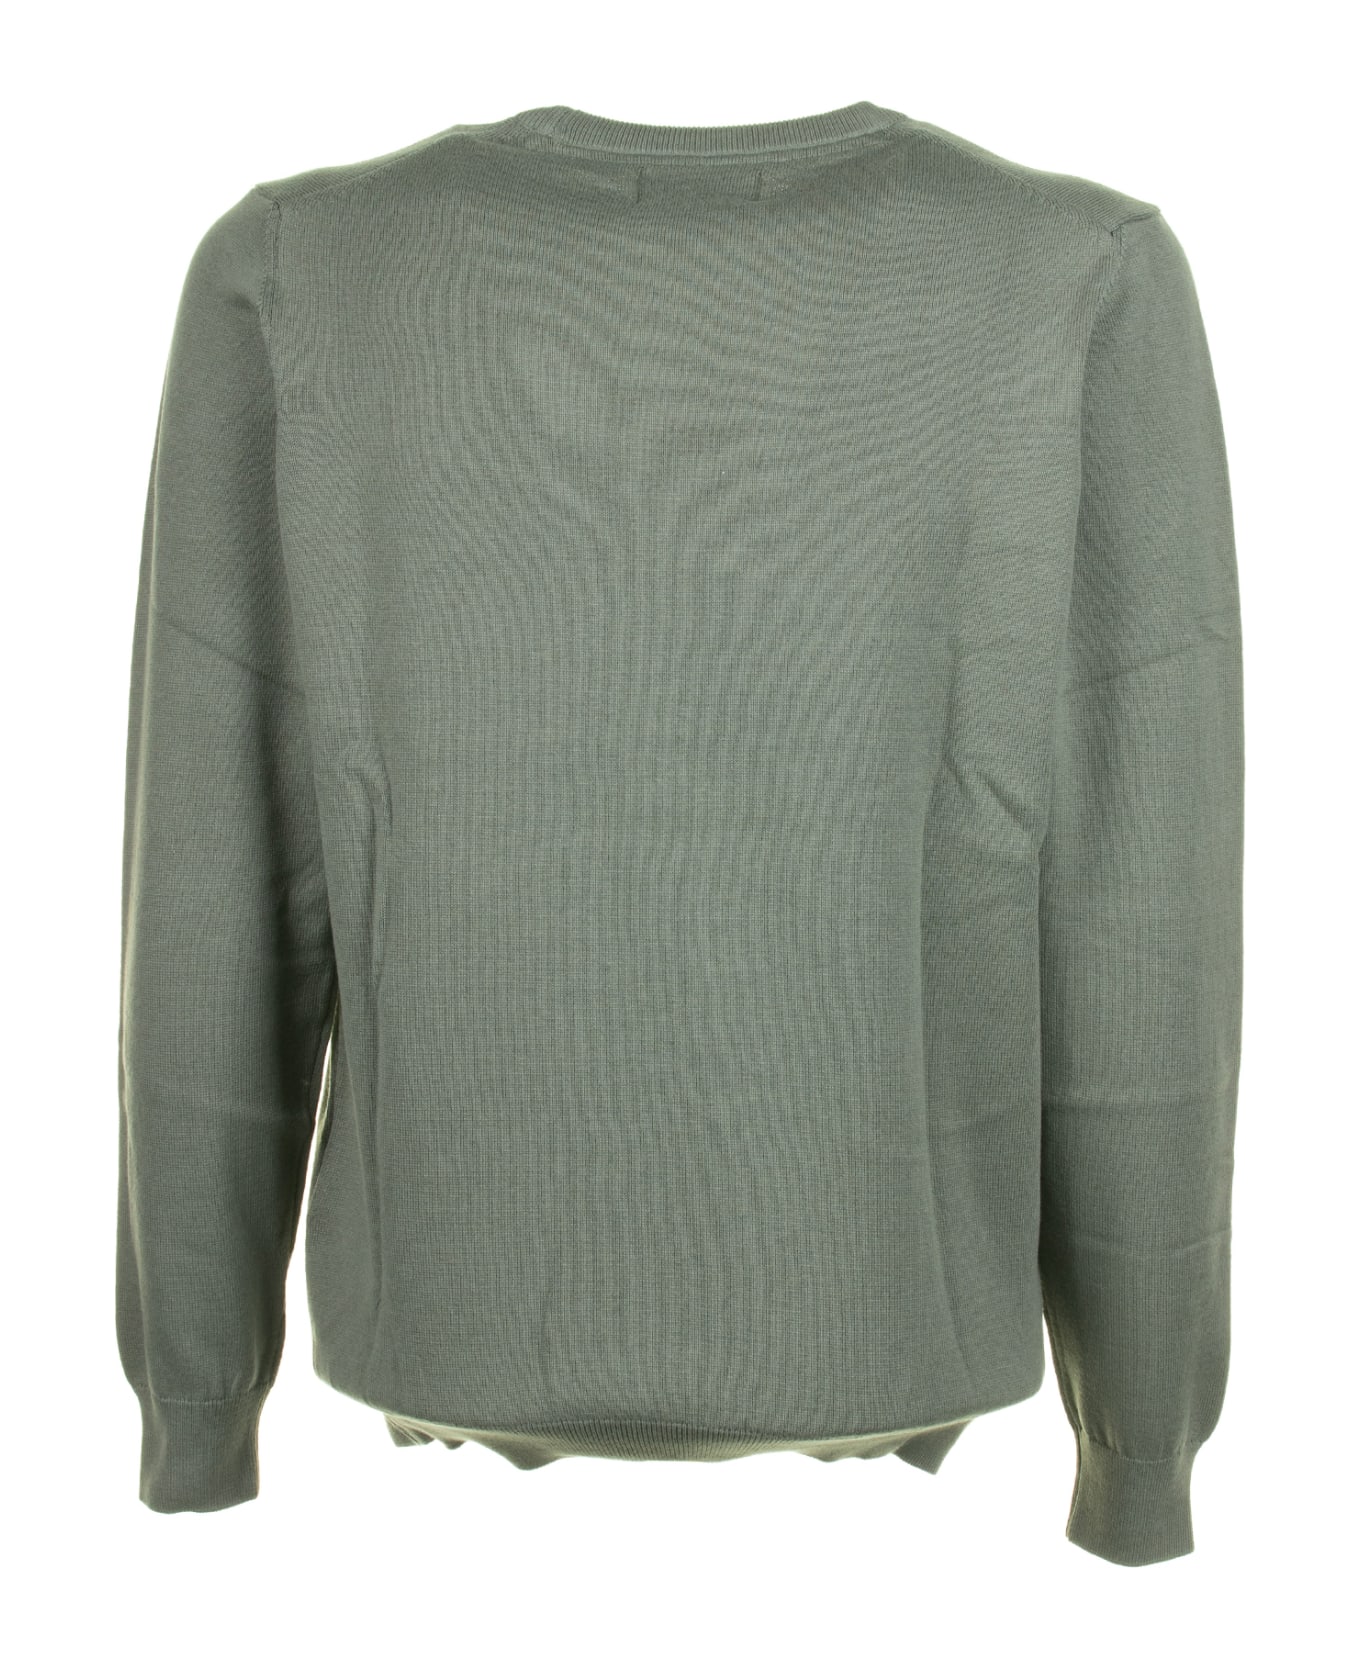 Barbour Green Crew Neck Sweater - AGAVE GREEN ニットウェア